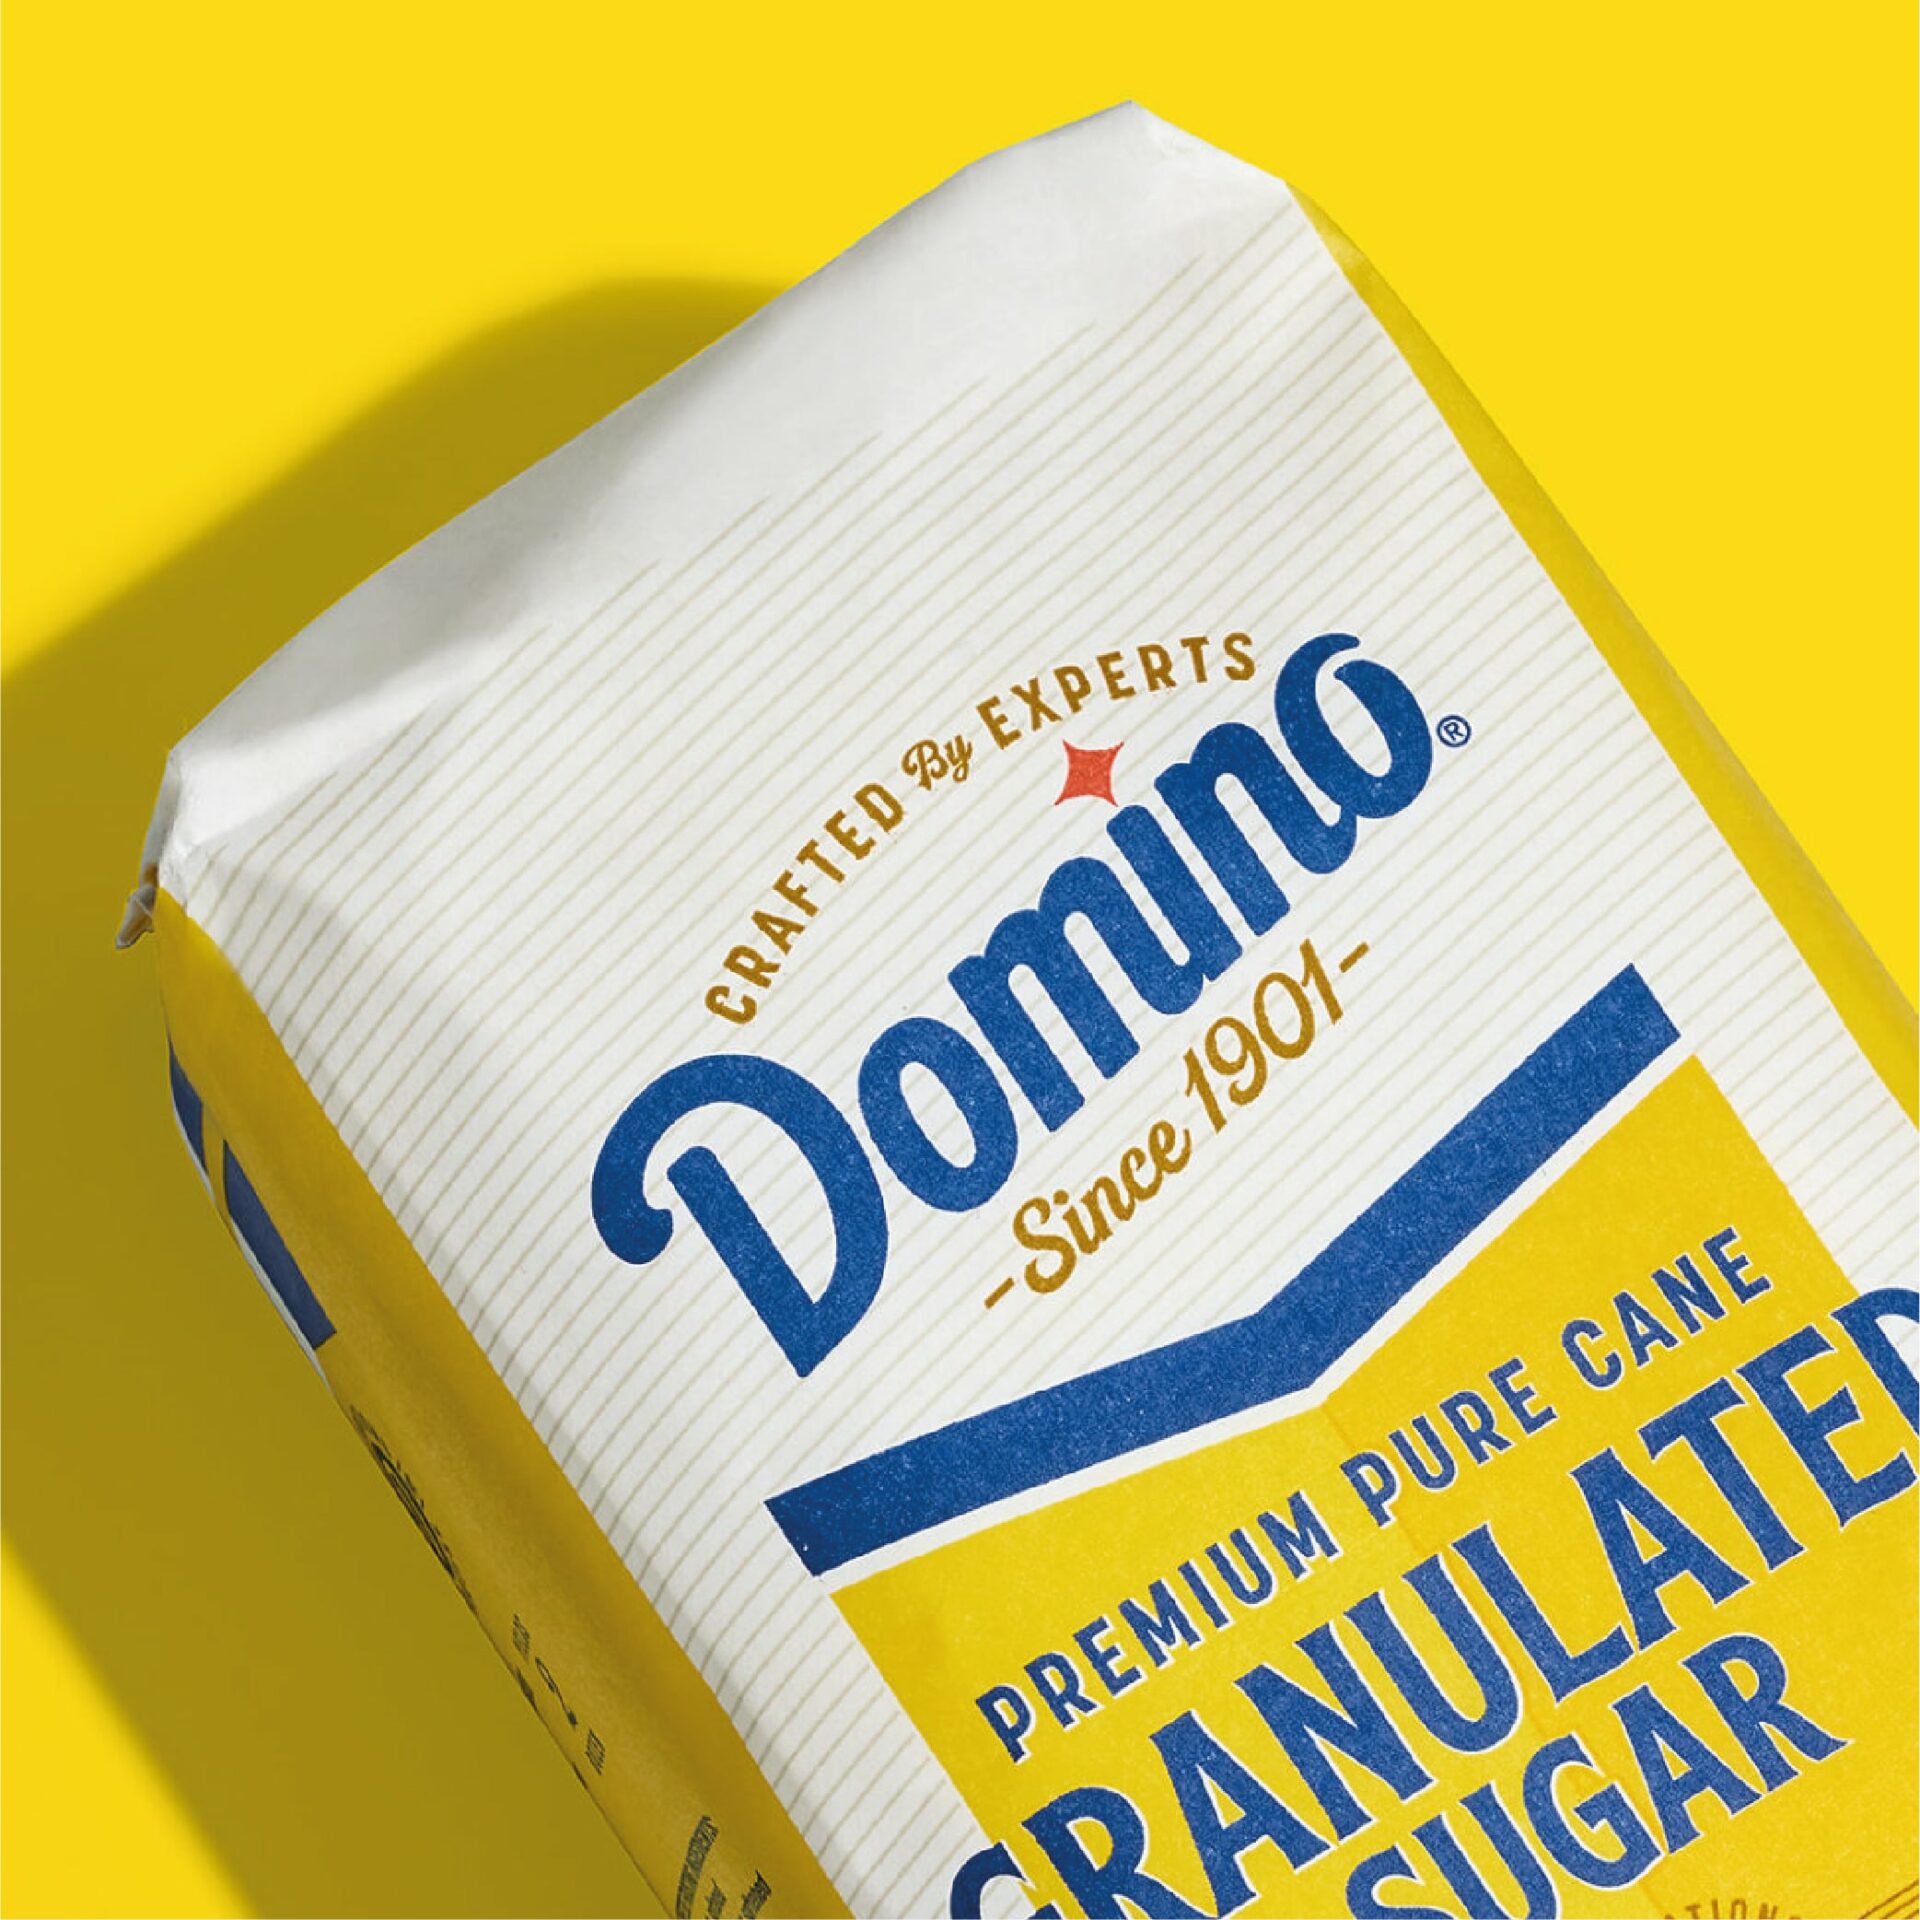 ASR Group – Domino Sugar